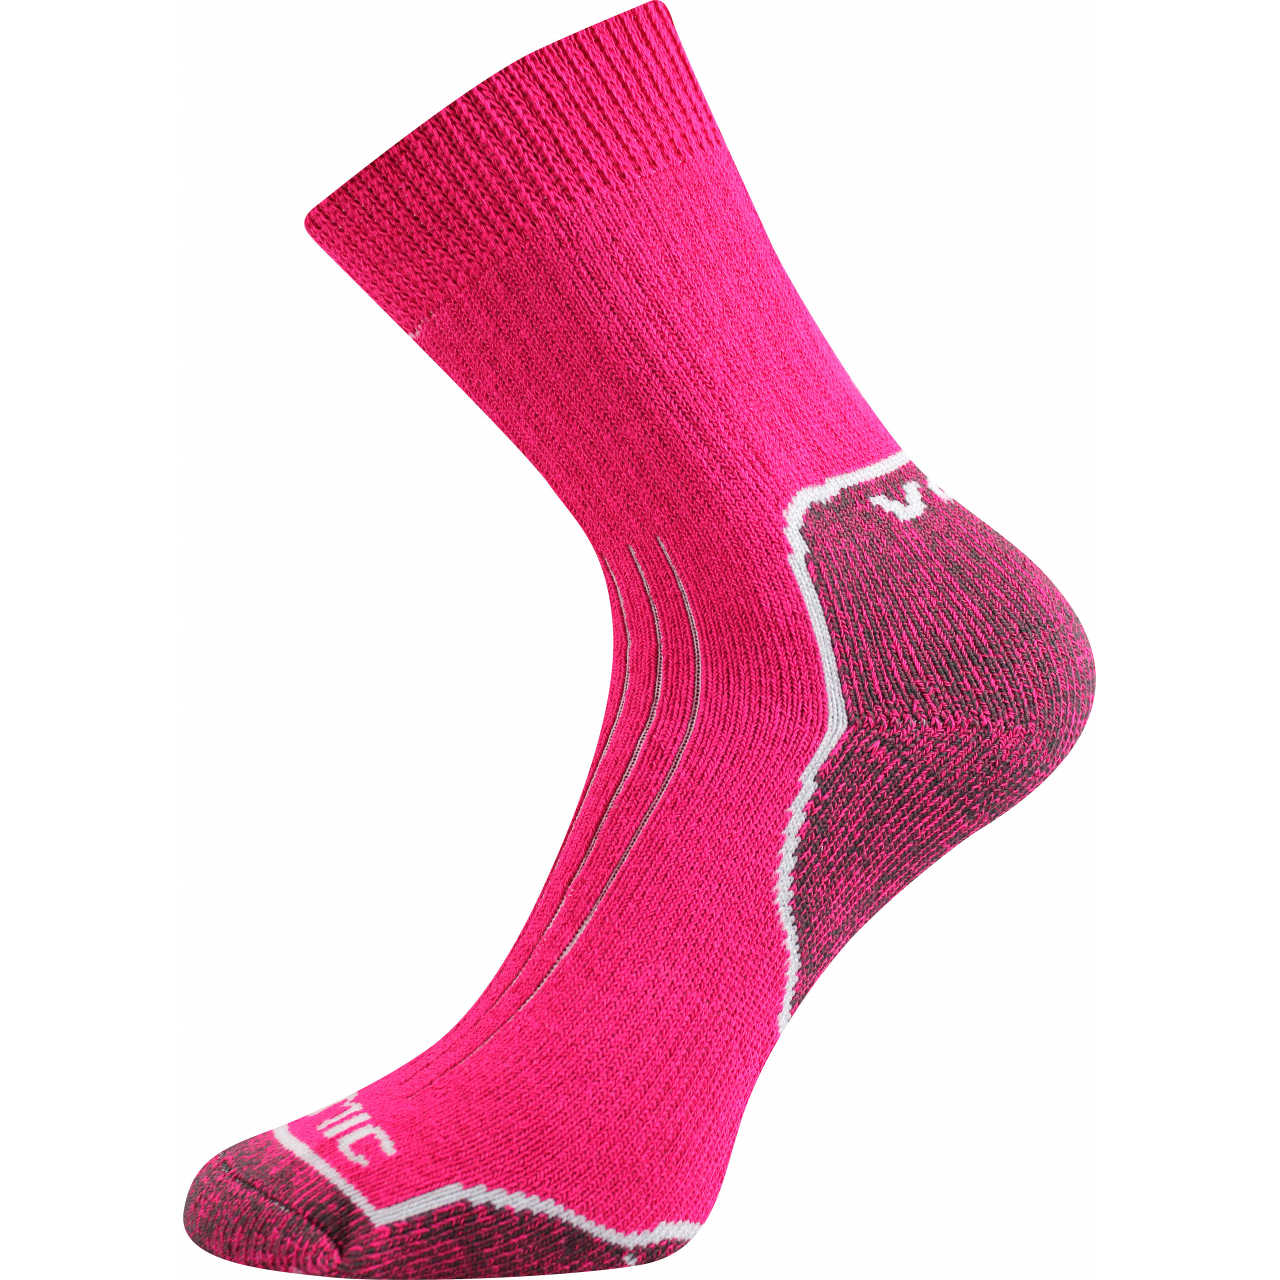 Ponožky unisex termo Voxx Zenith L + P - tmavě růžové, 35-37